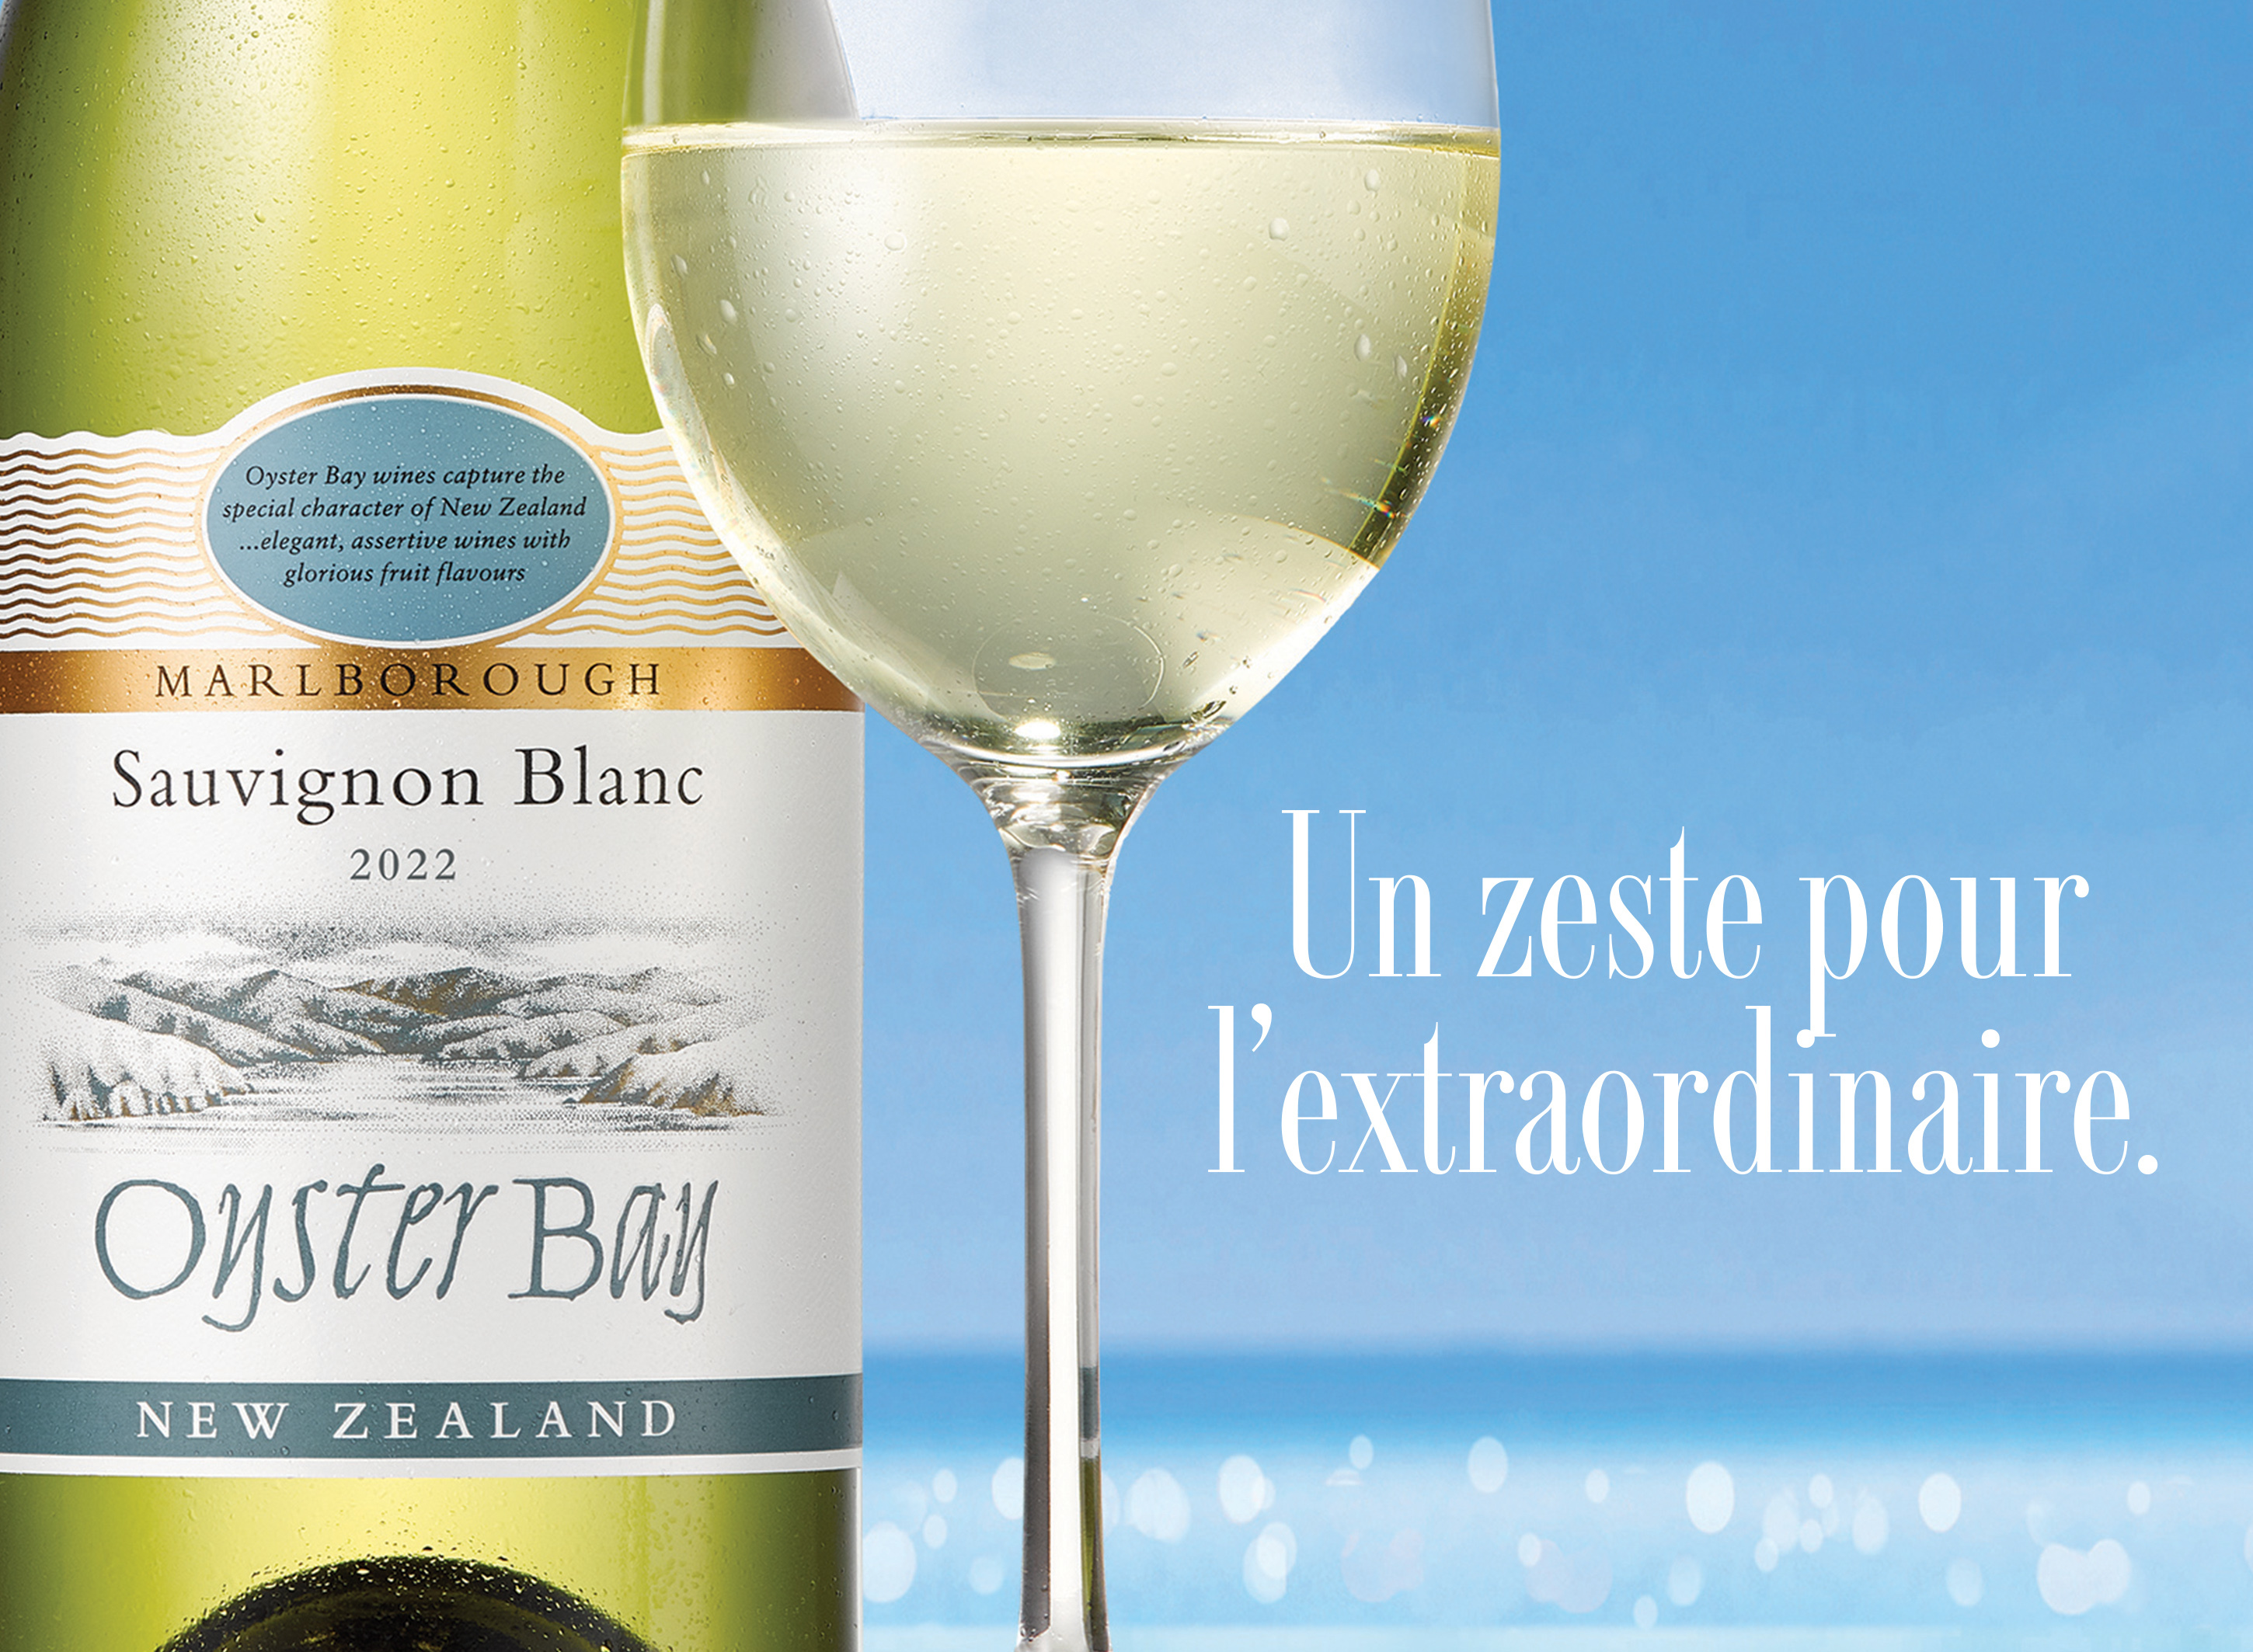 Oyster Bay Marlborough New Zealand Sauvignon Blanc Wine bottle and glass French